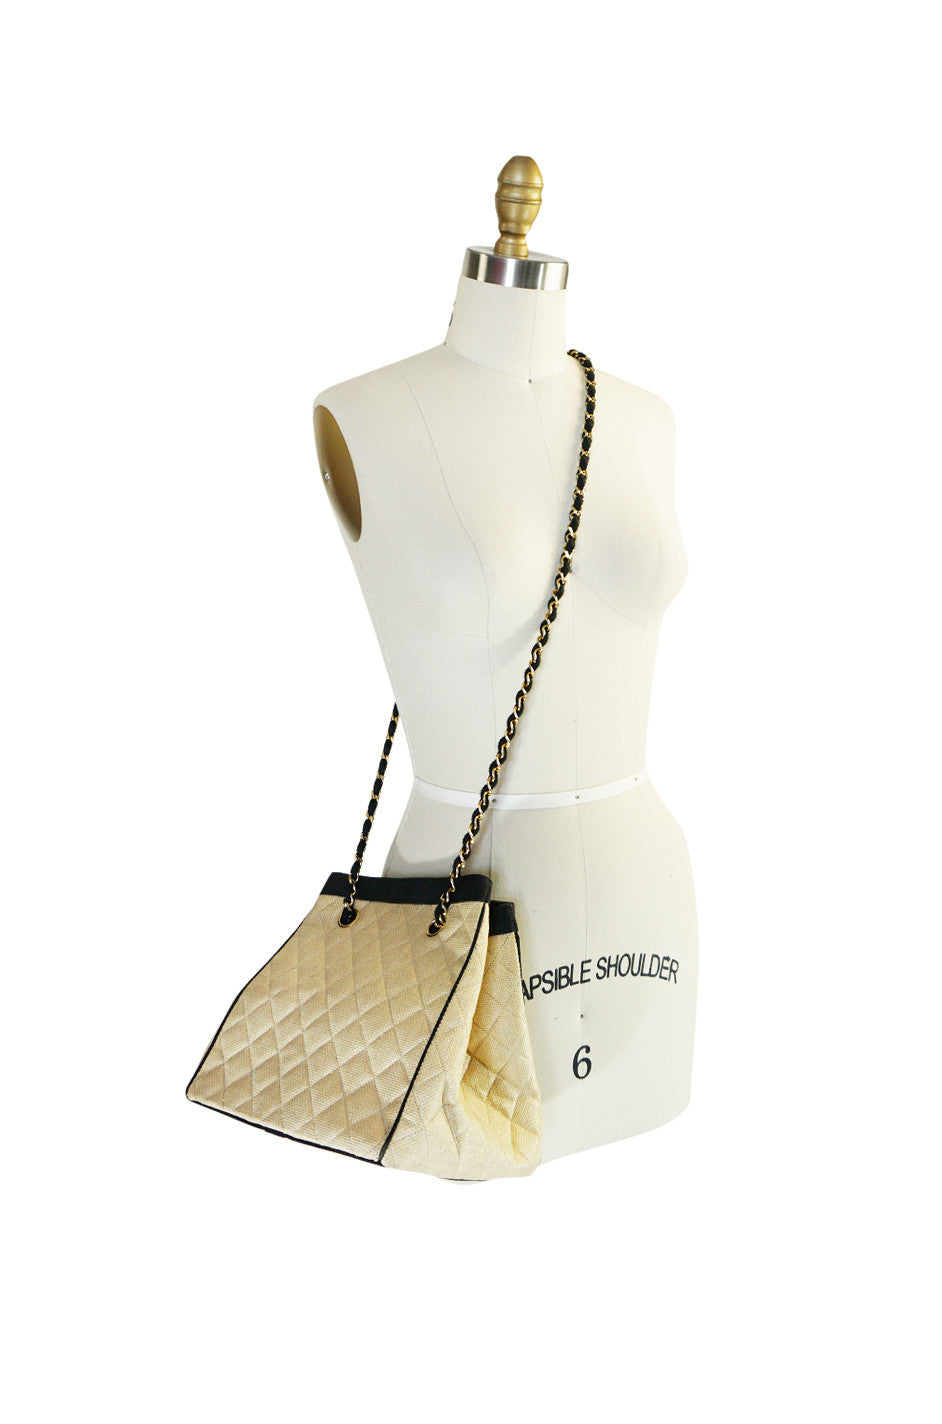 Karl Lagerfeld Designer Hard Clutch Bag with Dust Bag and Original Box